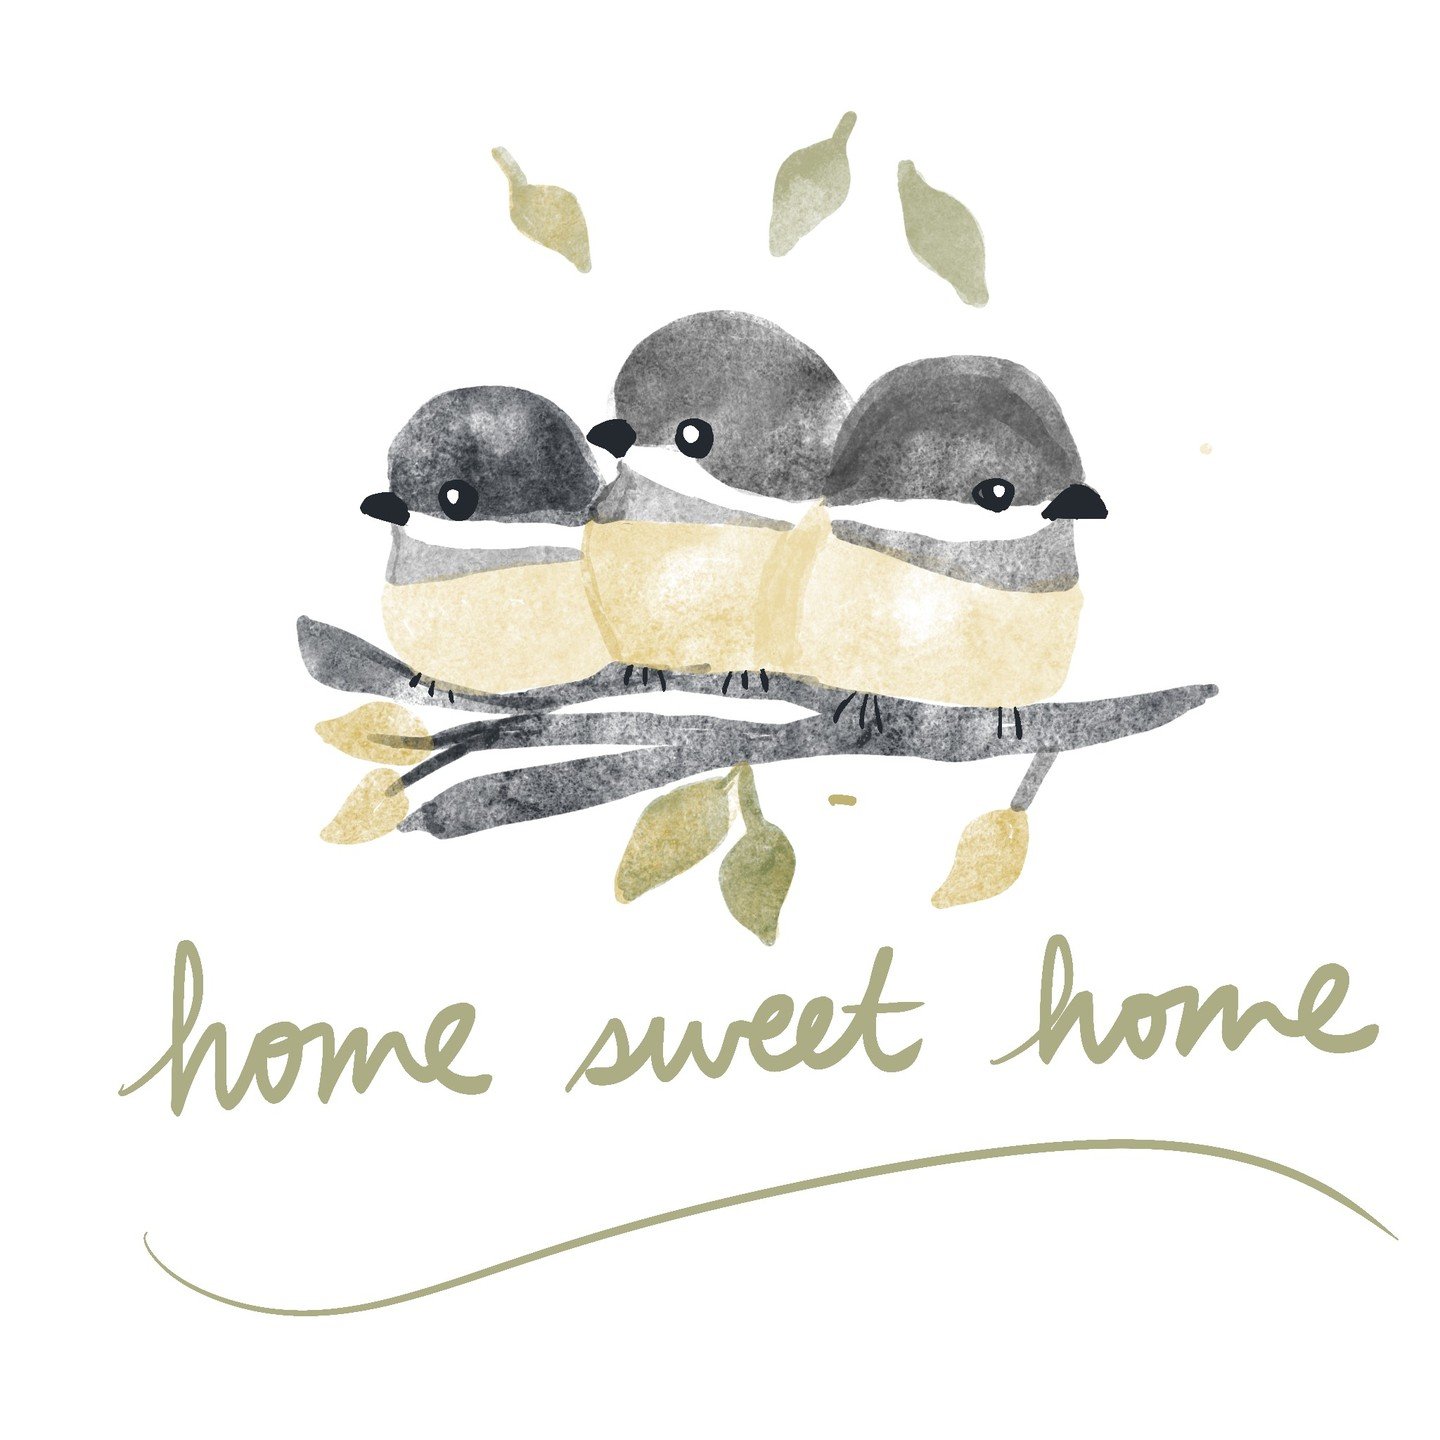 Home sweet home :D infiniteshirley.com #art #artofinstagram #artist #watercolor #watercolorart #drawing #flowers